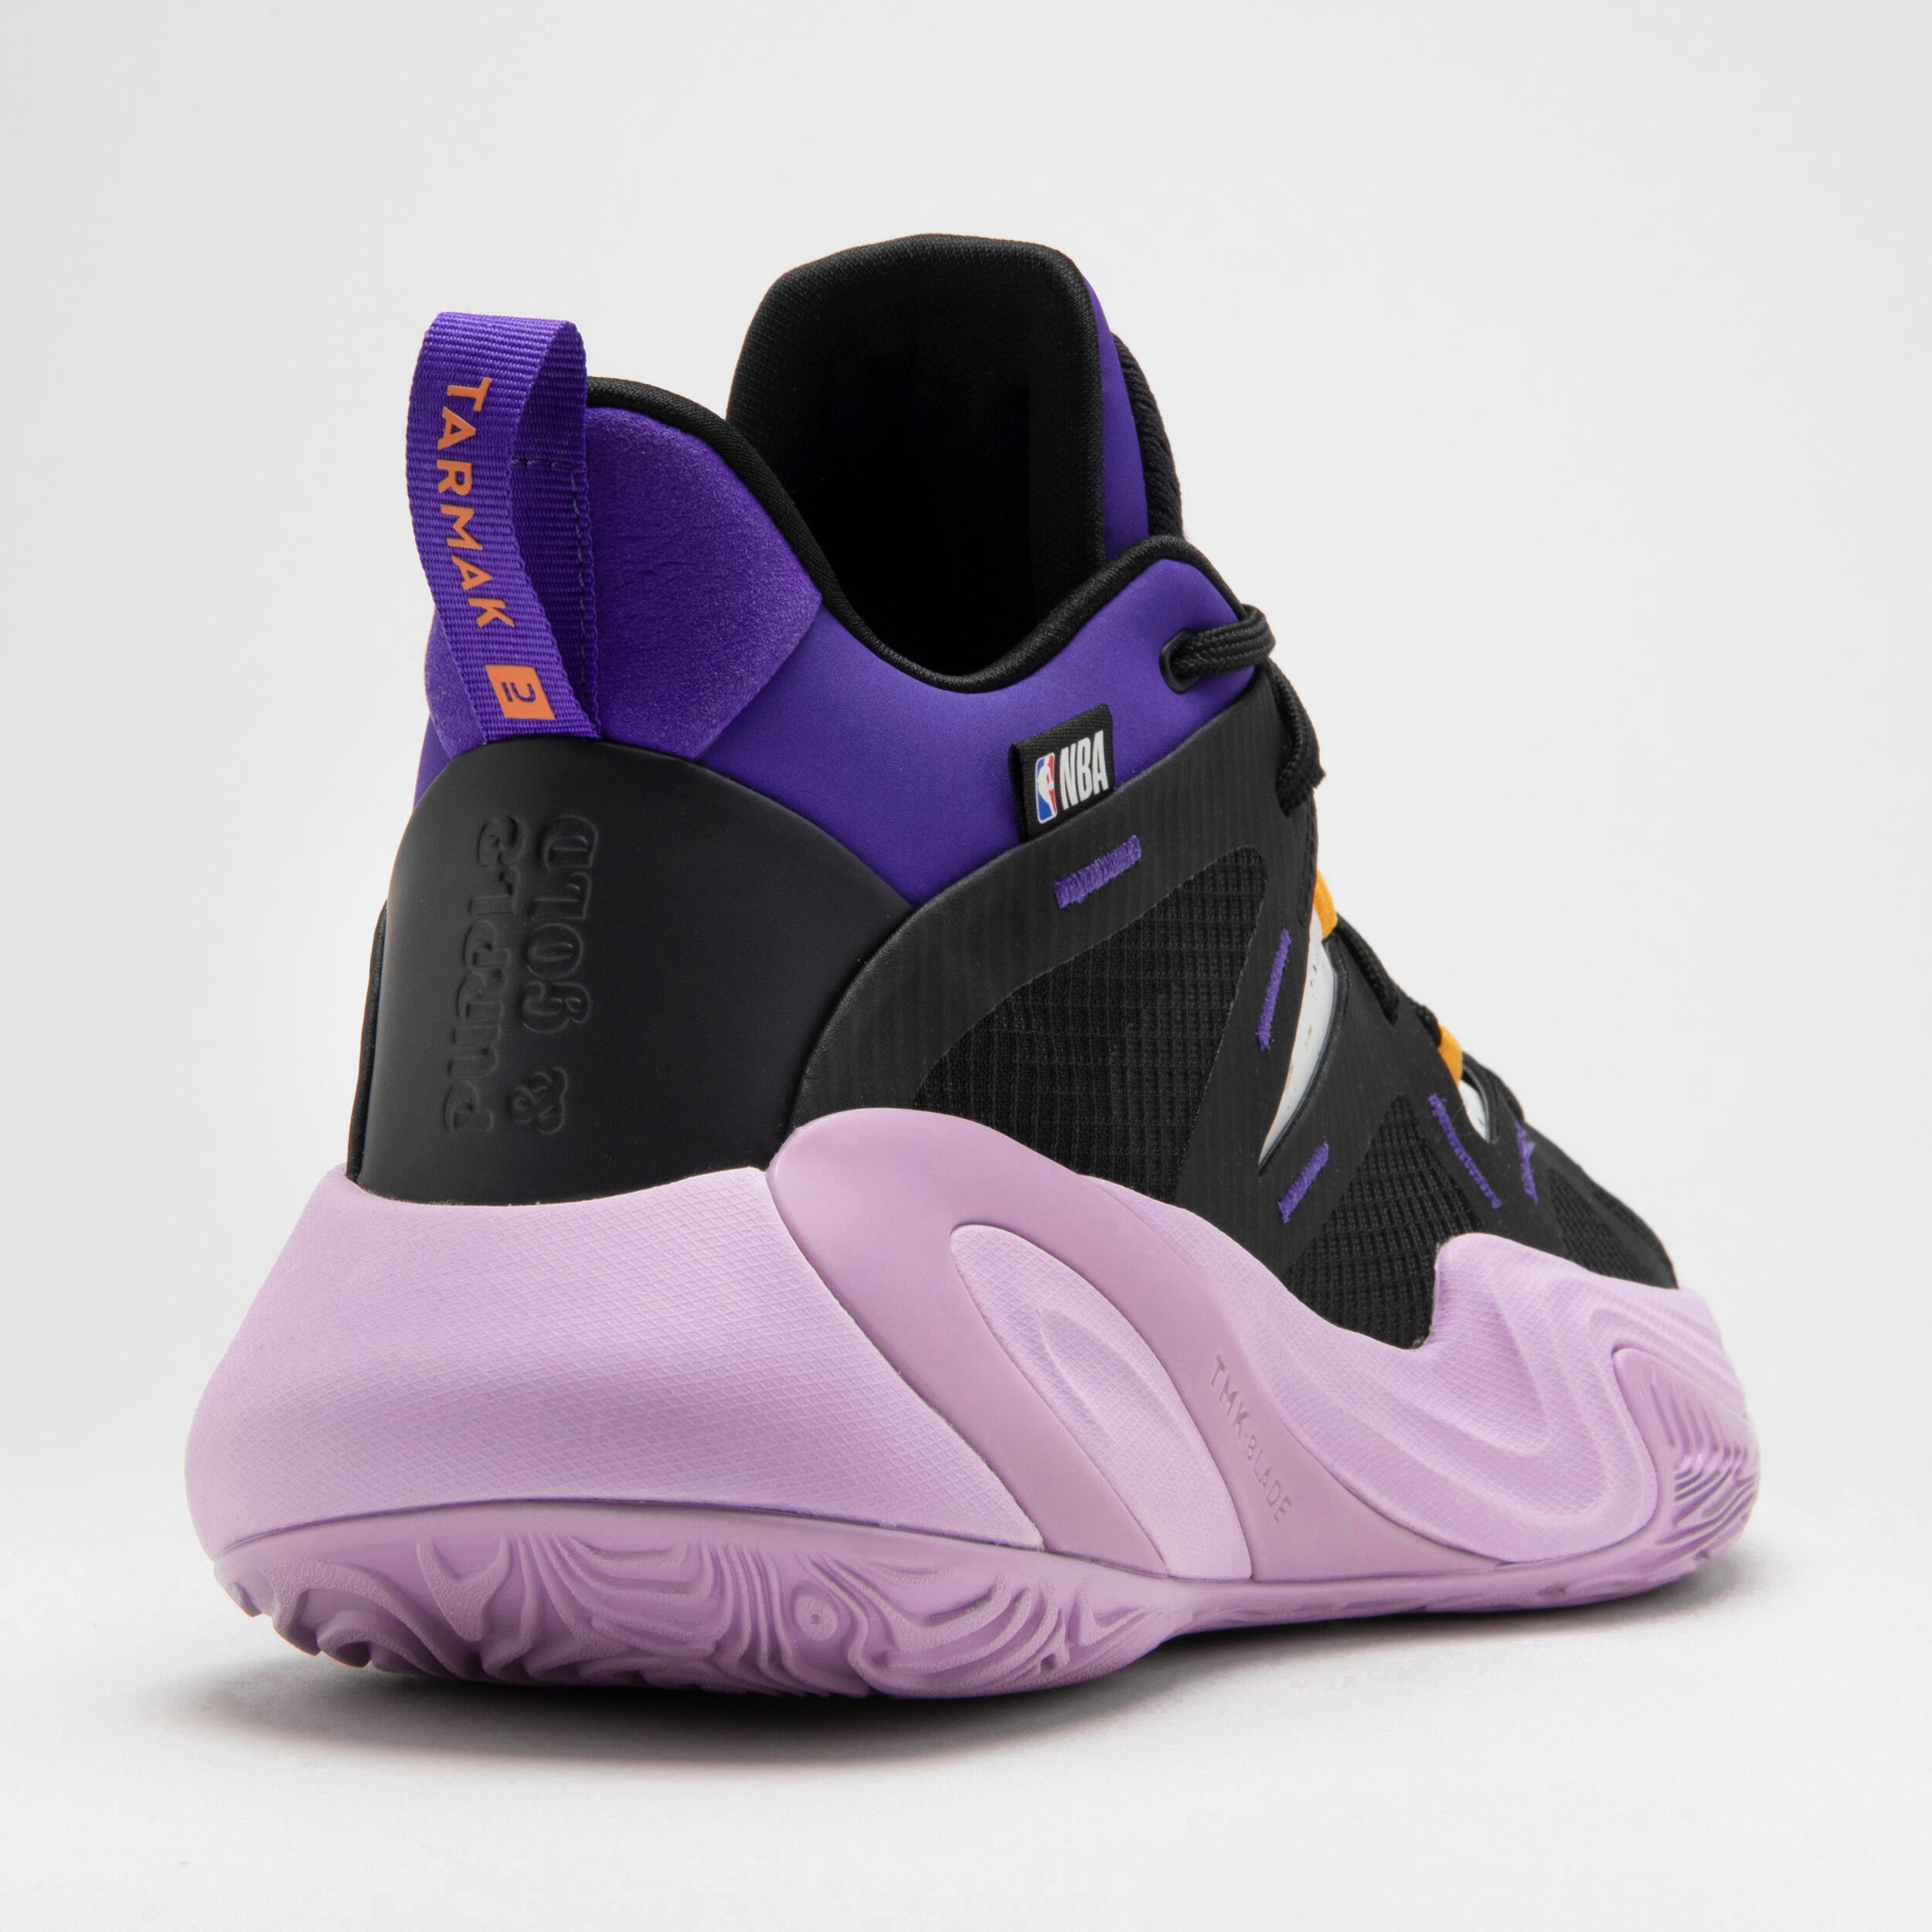 Men's/Women's Basketball Shoes 900 NBA MID-3 - Los Angeles Lakers/Black 5/9